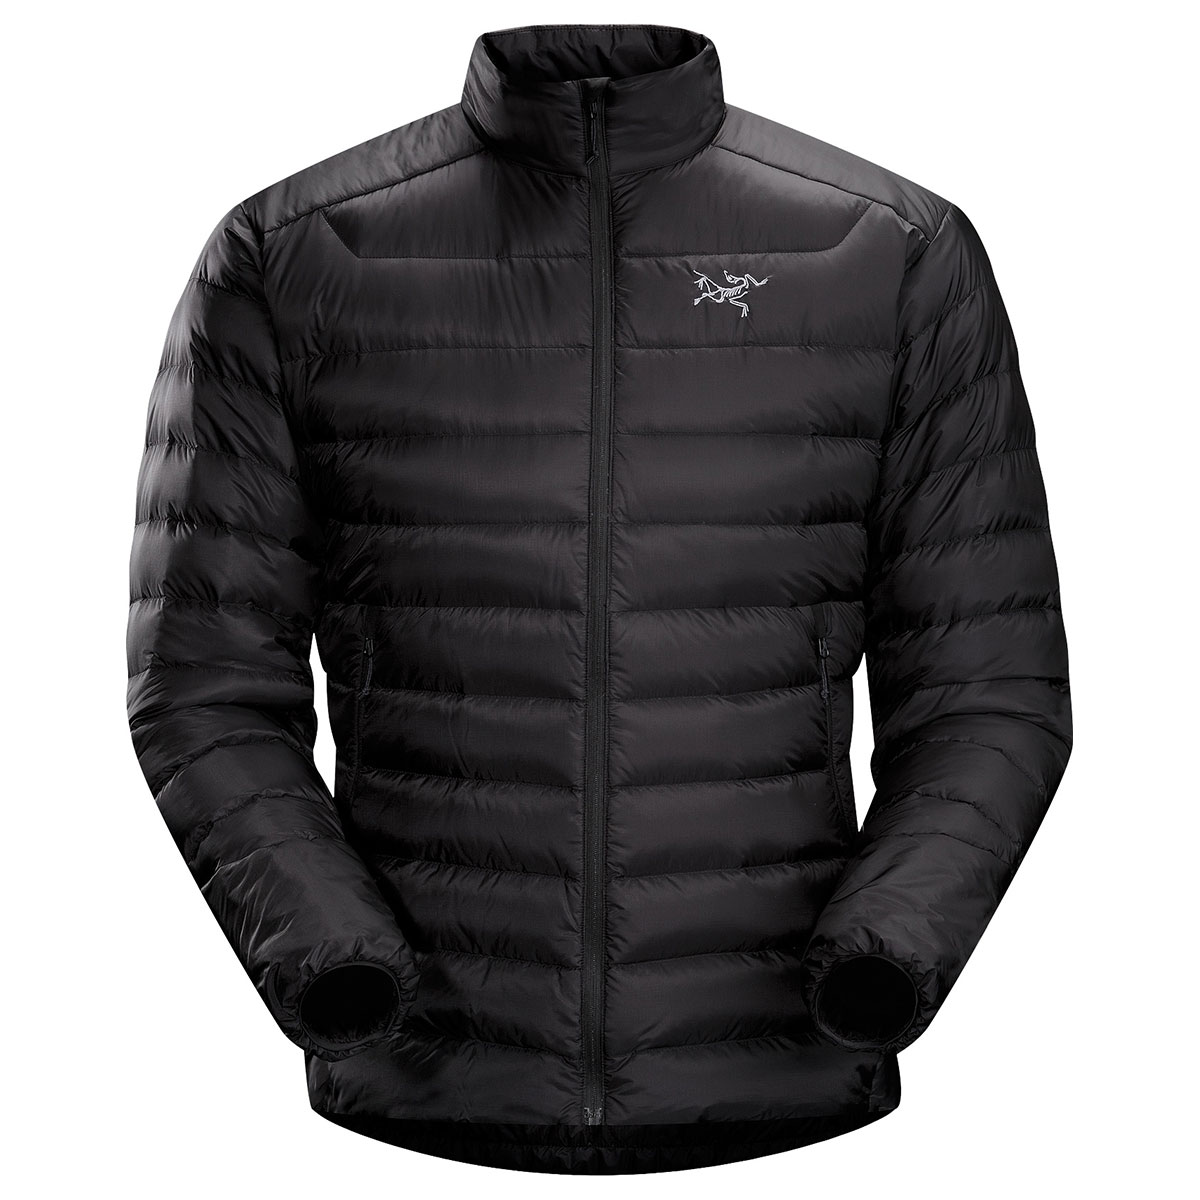 Arc'teryx Cerium LT Jacket, men's, discontinued Spring 2016 model (free ...